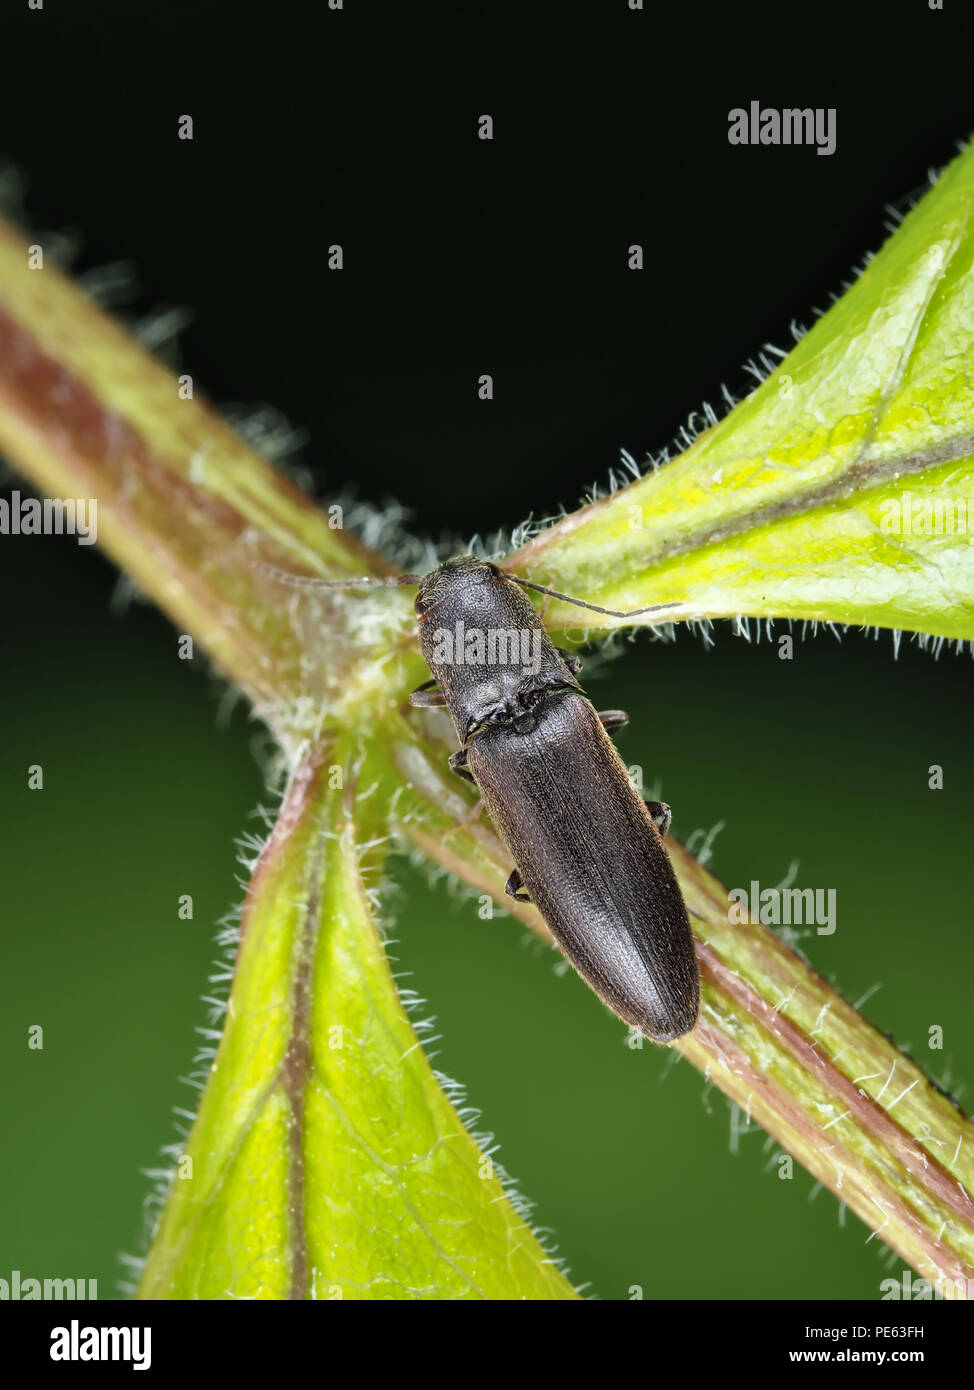 Black click beetle (Elateridae), dorsal view Stock Photo